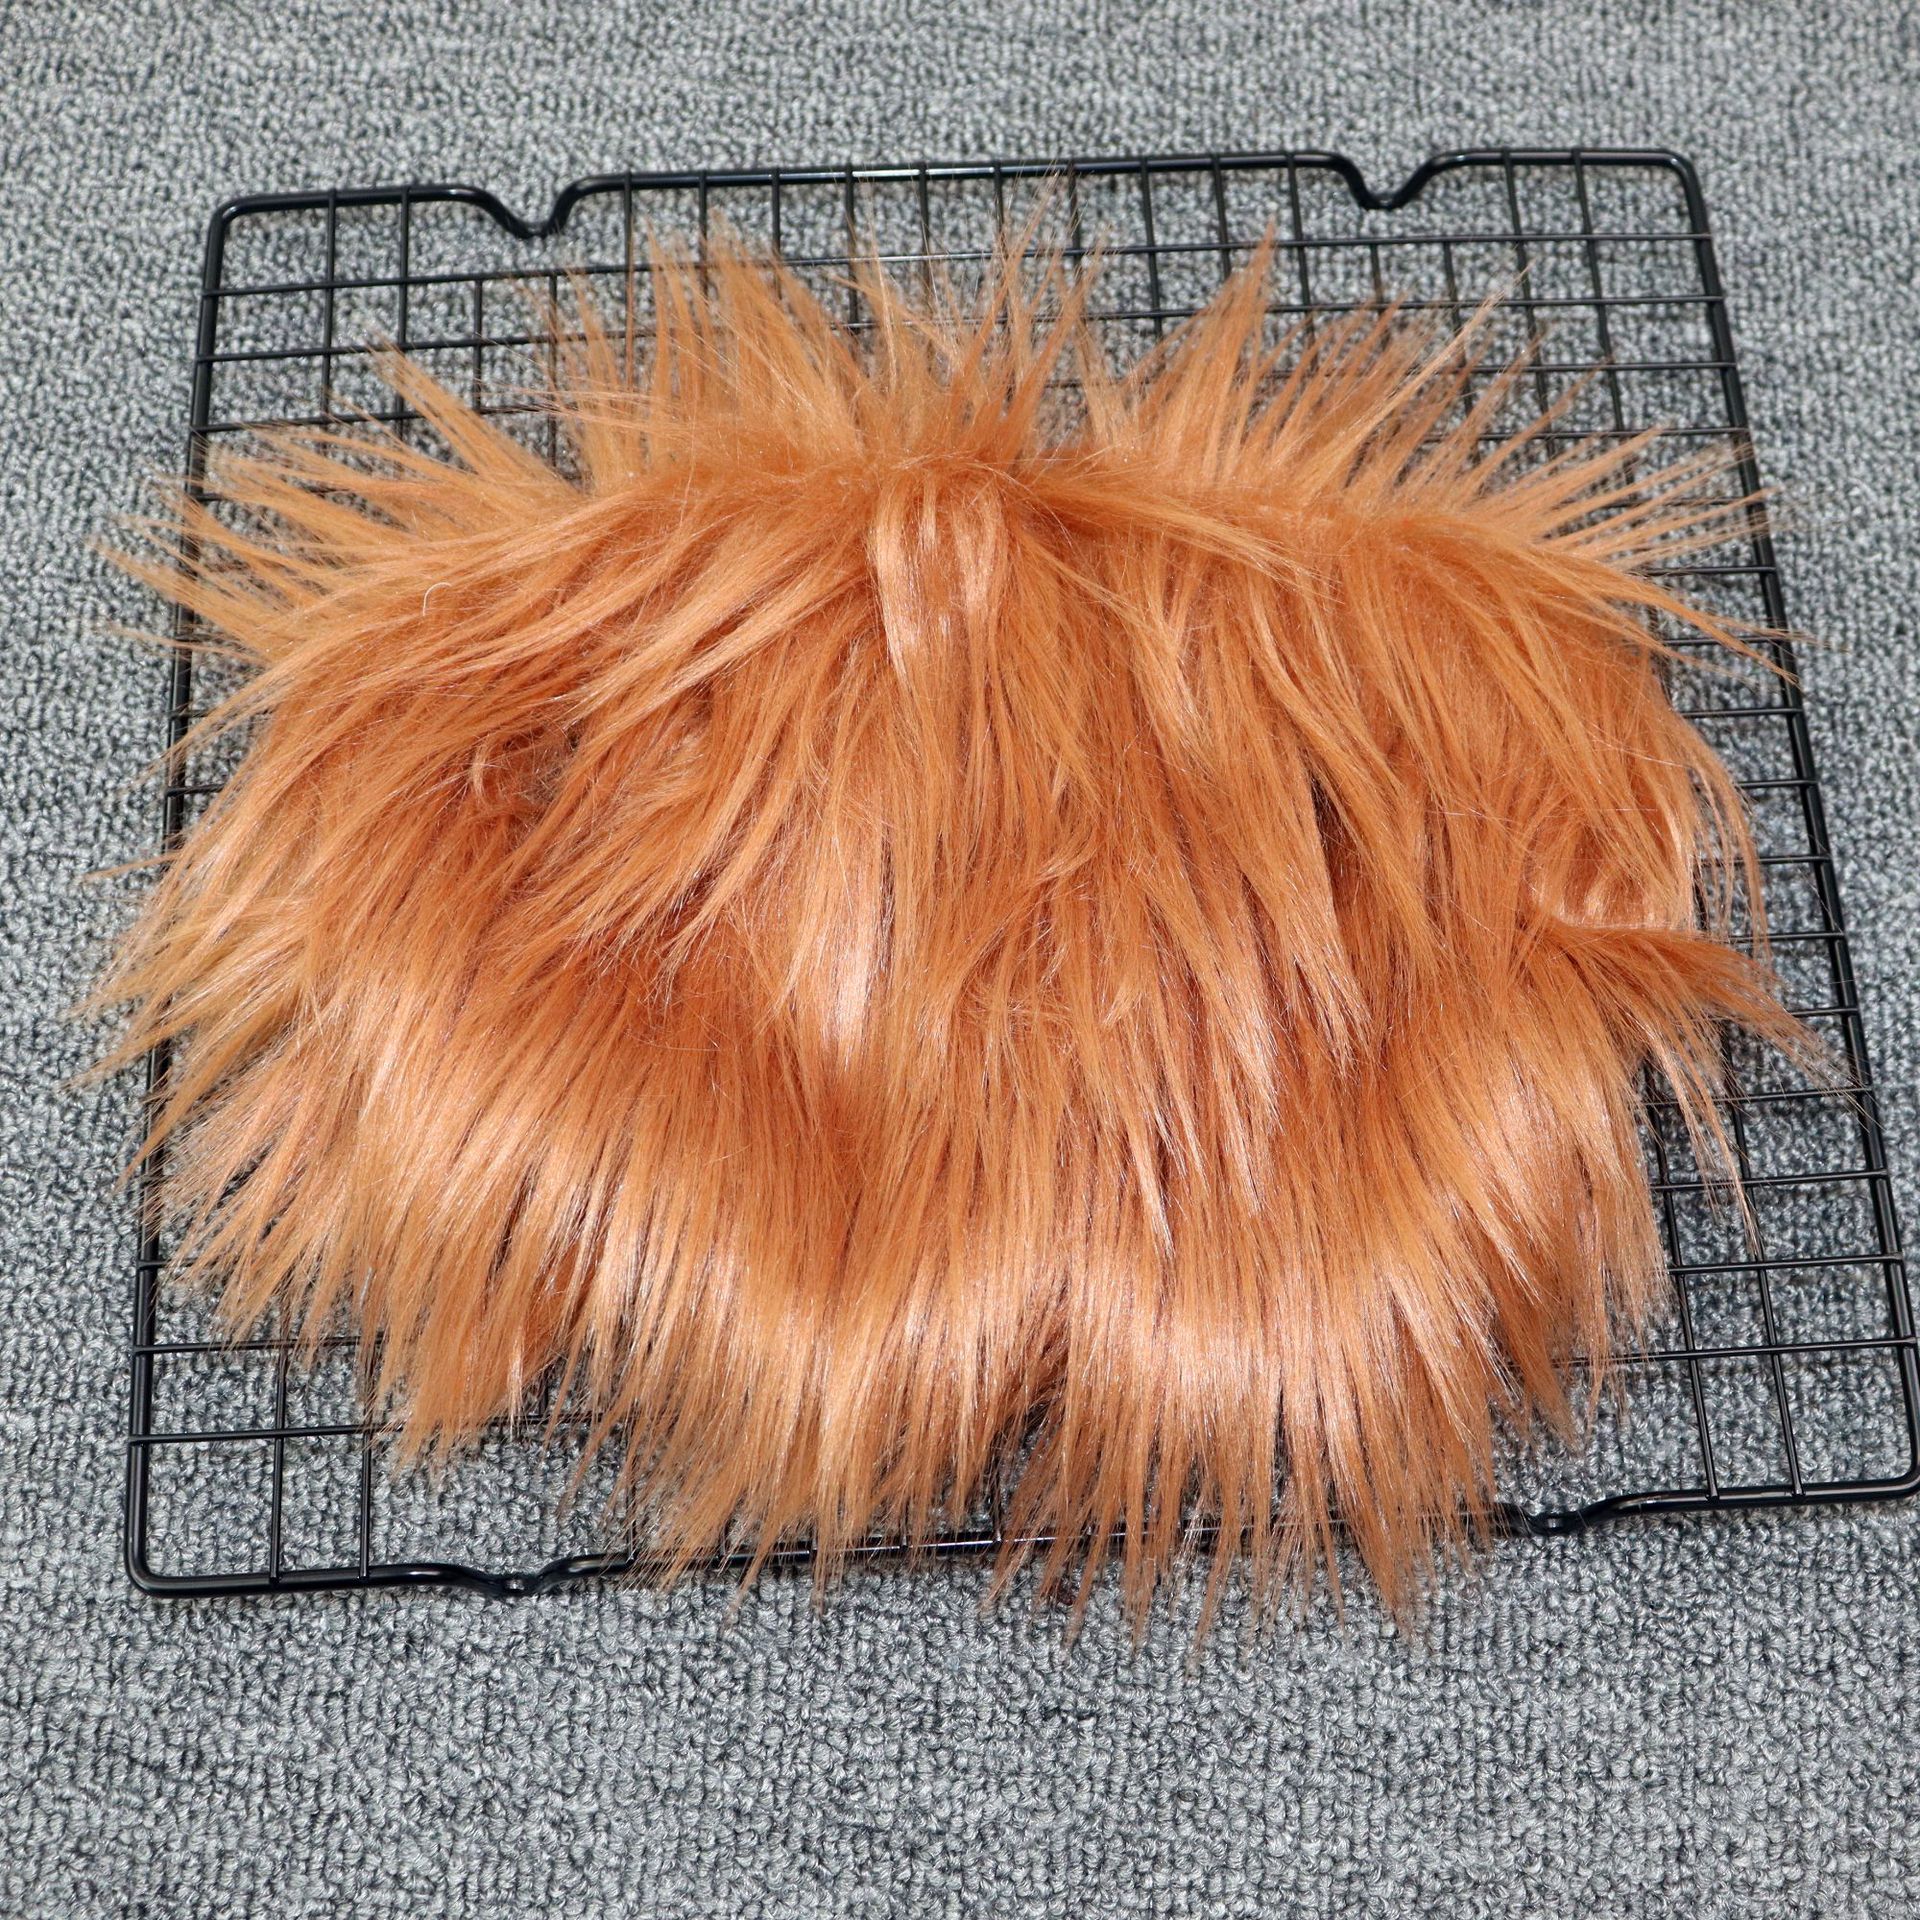 Deadly Doll Dog Killing Magic Costume Halloween Pet Costume Wig Medium Large Dog Amazon